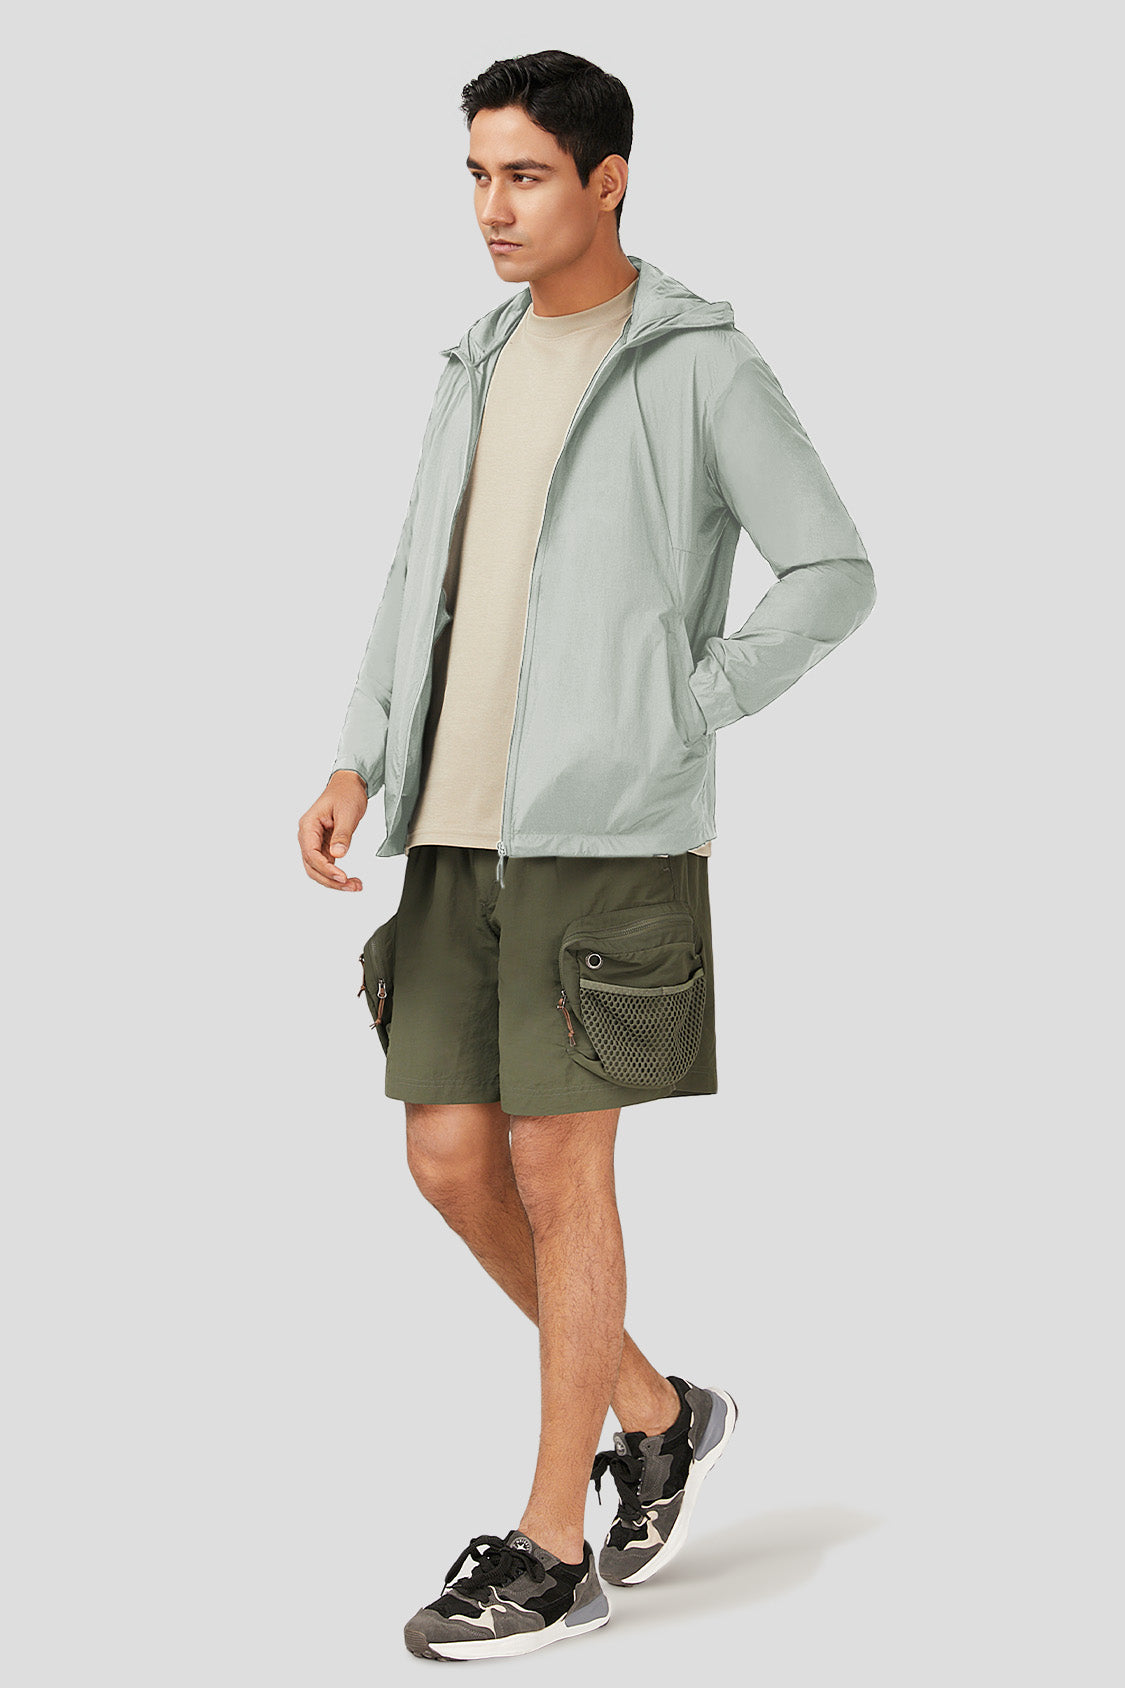 beneunder men's cooling uv sun protection athletics jacket hoodie #color_light curry grey